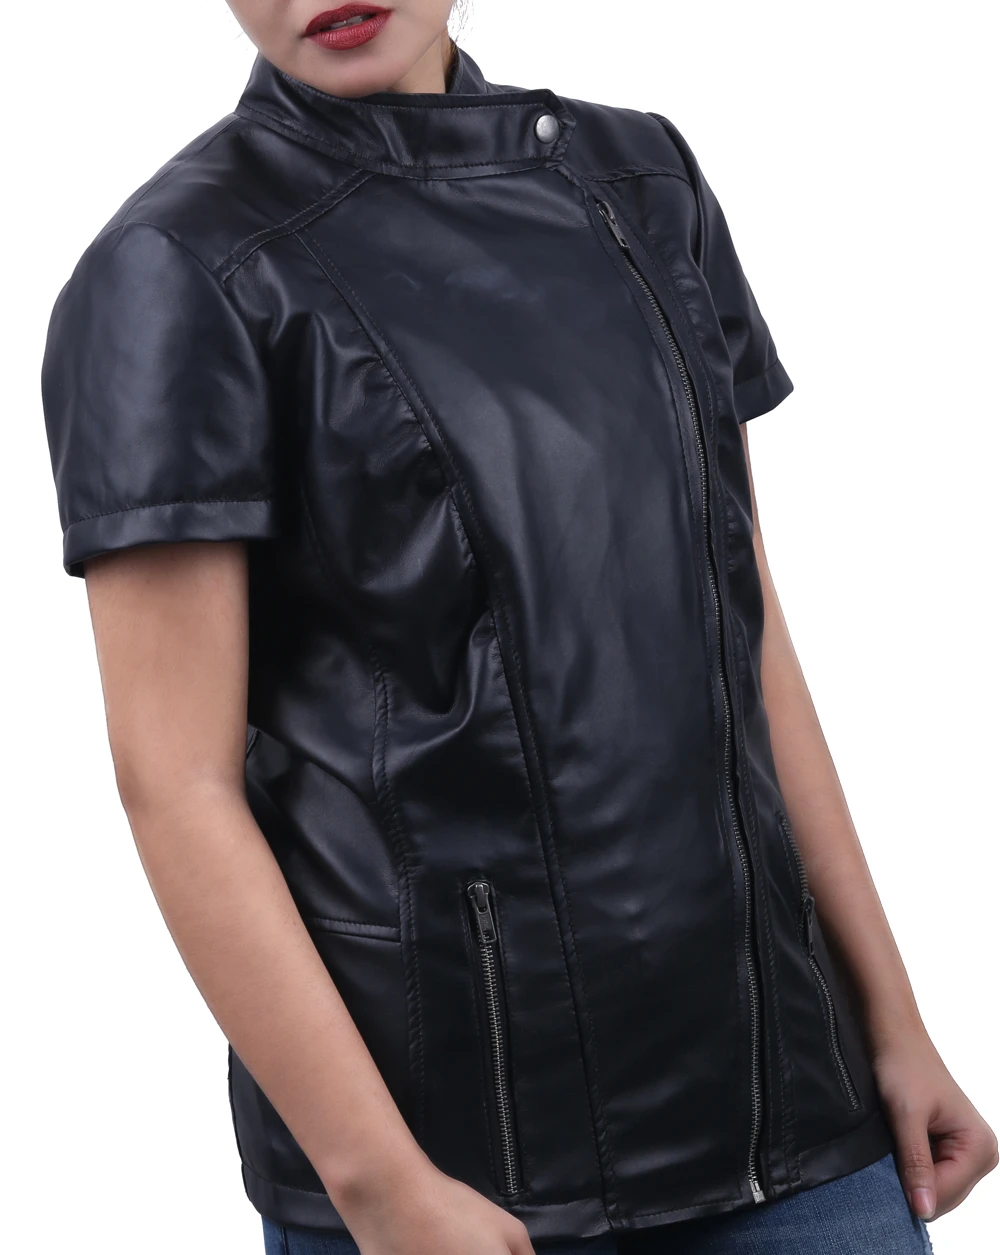 Mollison half sleeve leather jacket